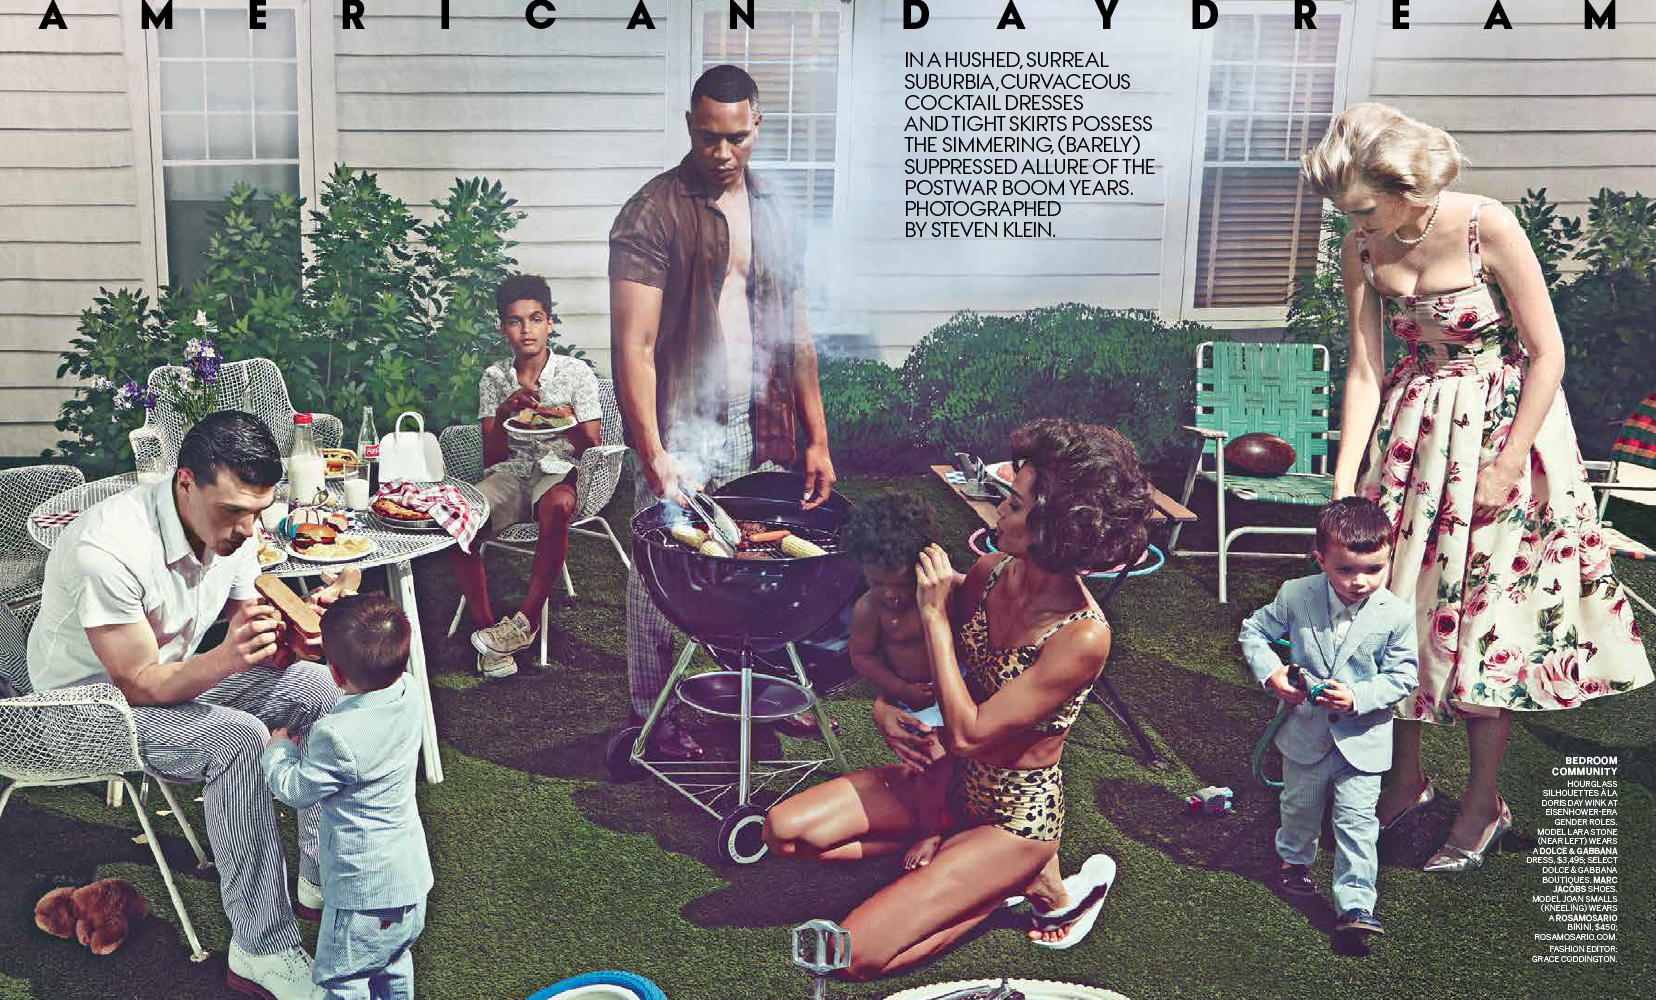 Michael Philouze | Vogue US: American Daydream  | 1